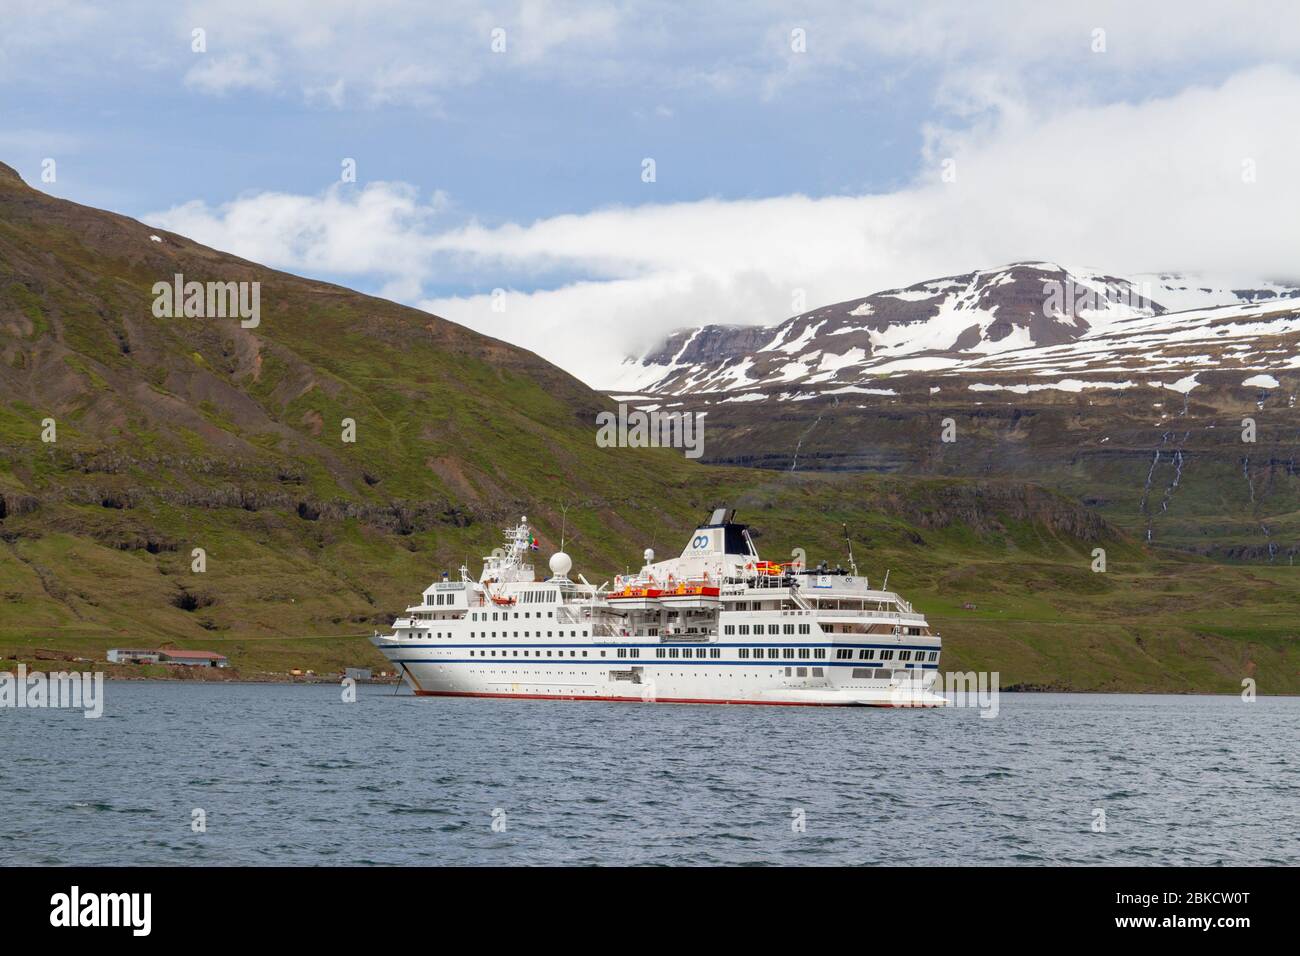 L'RCGS Resolute One Ocean una nave da crociera a cinque stelle rinforzata con ghiaccio ormeggiata a Seyðisfjörður, Islanda. Foto Stock